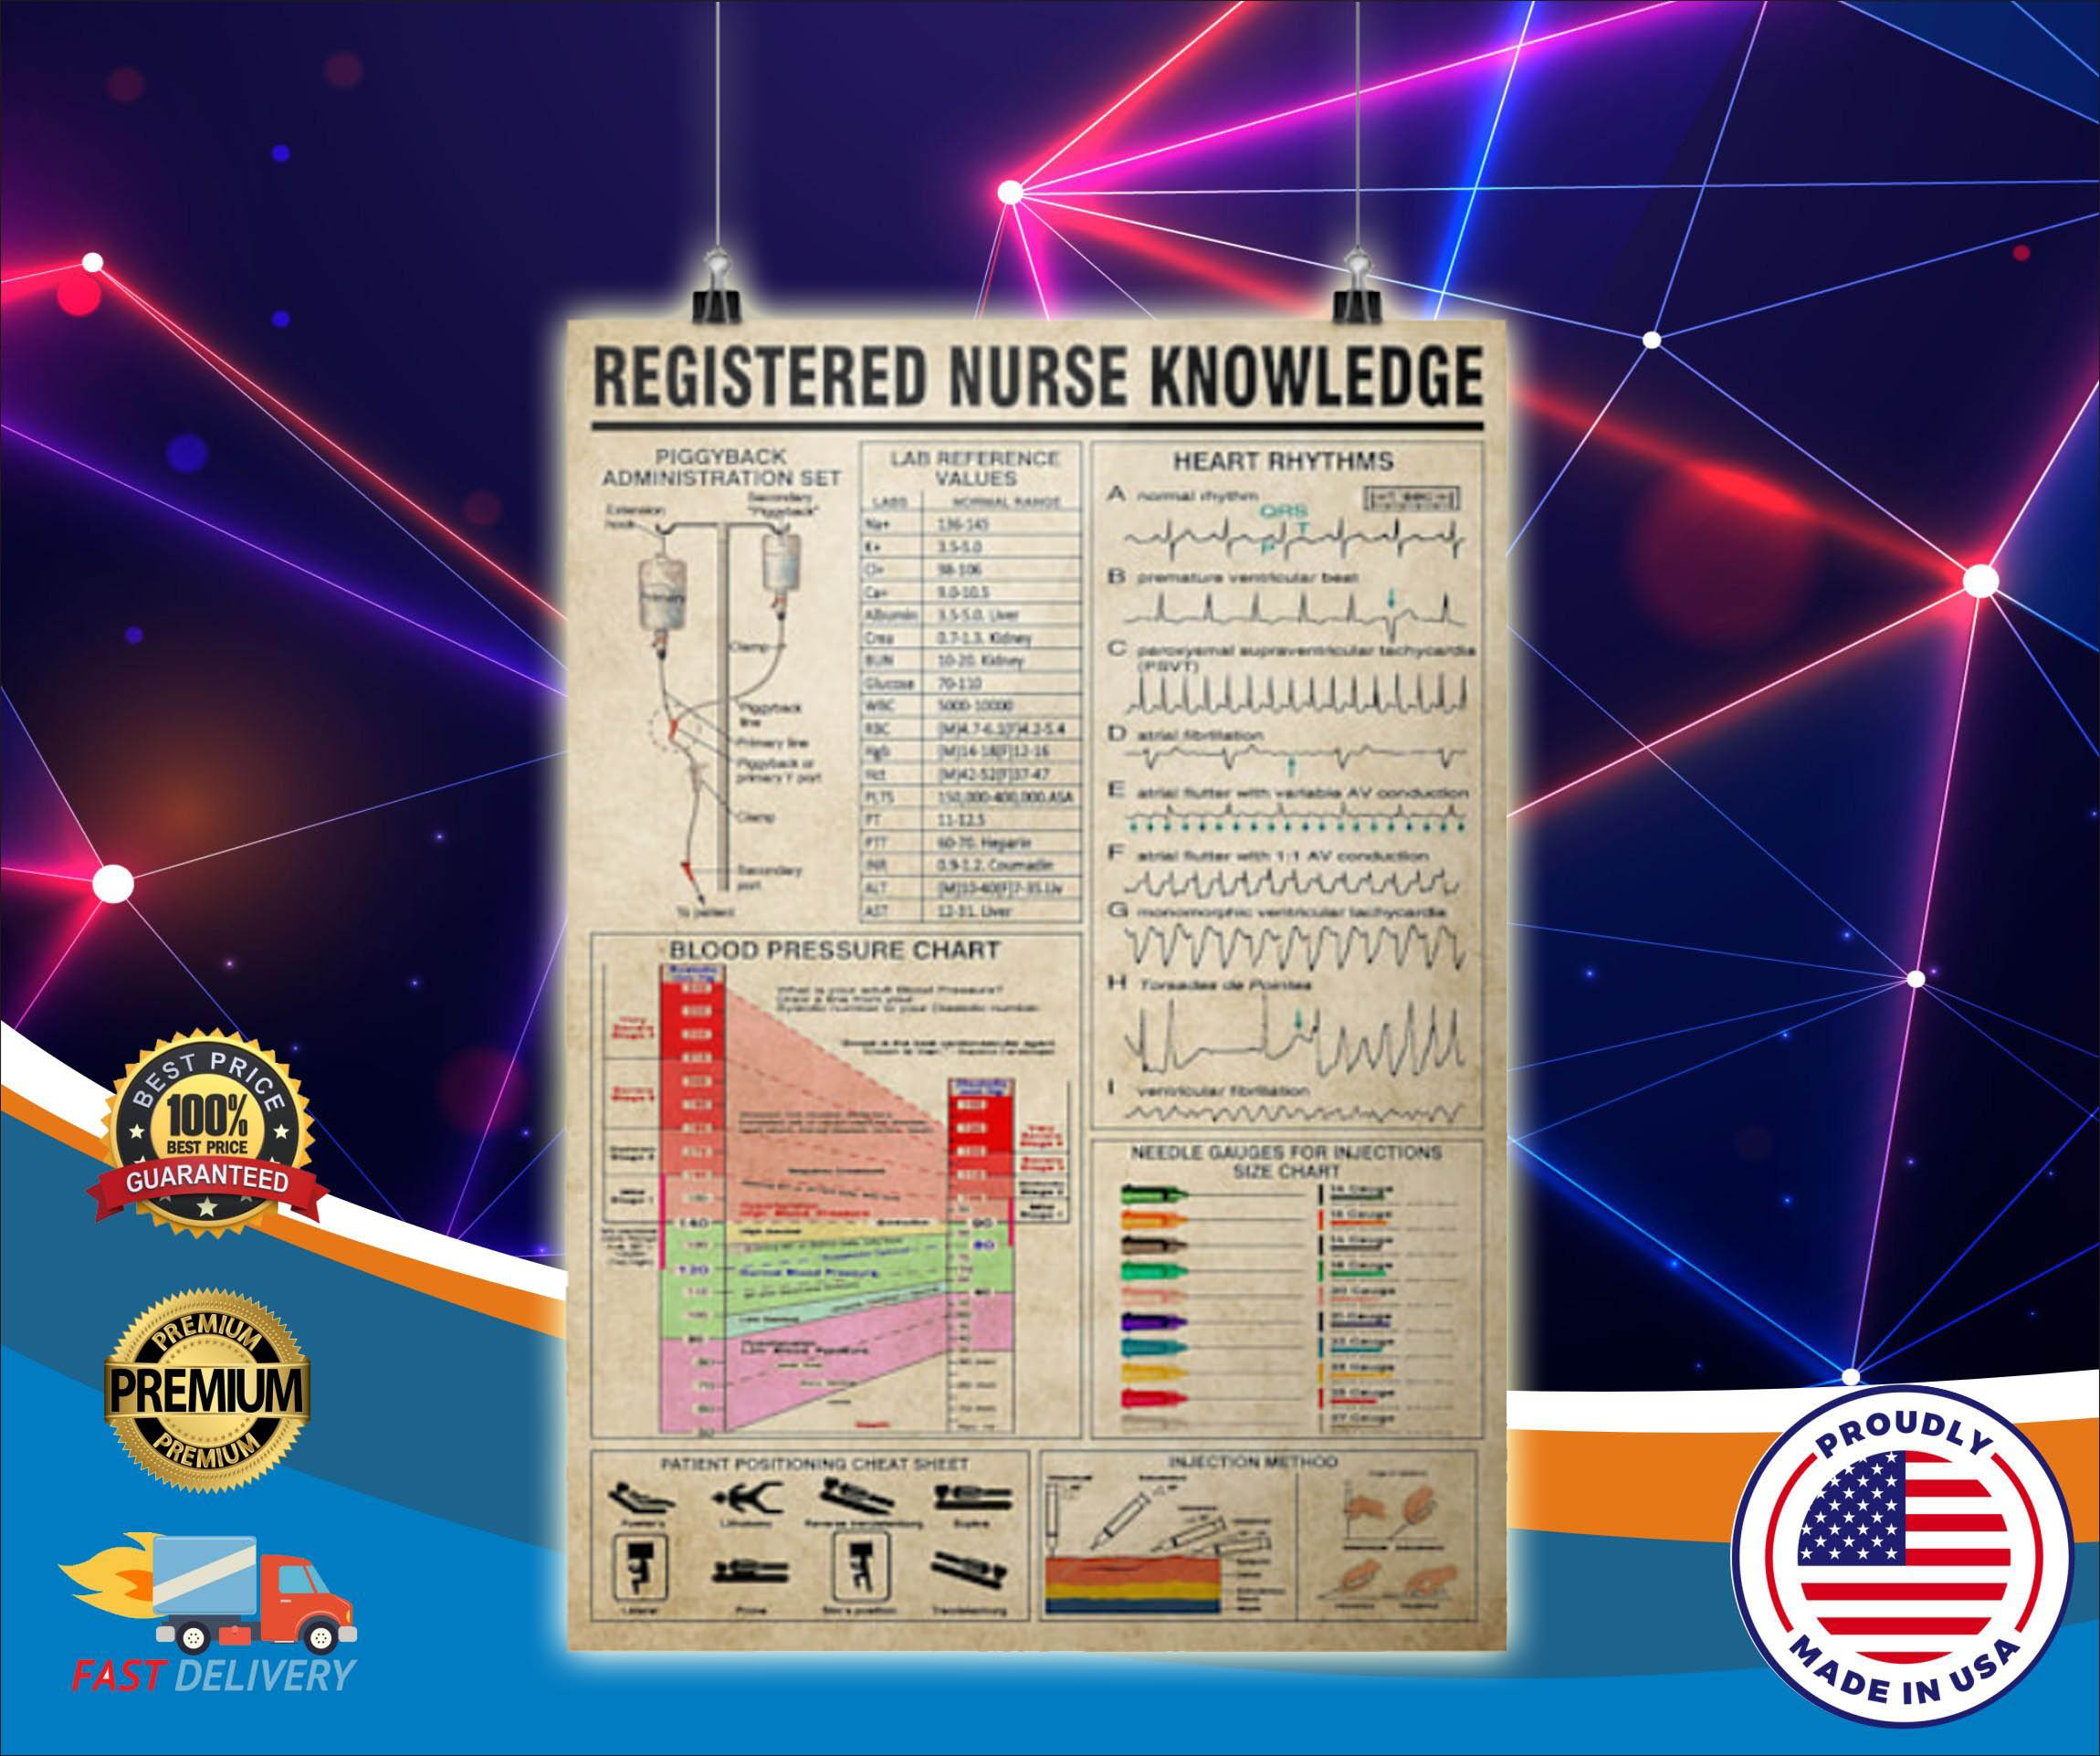 Registered nurse knowledge poster 4